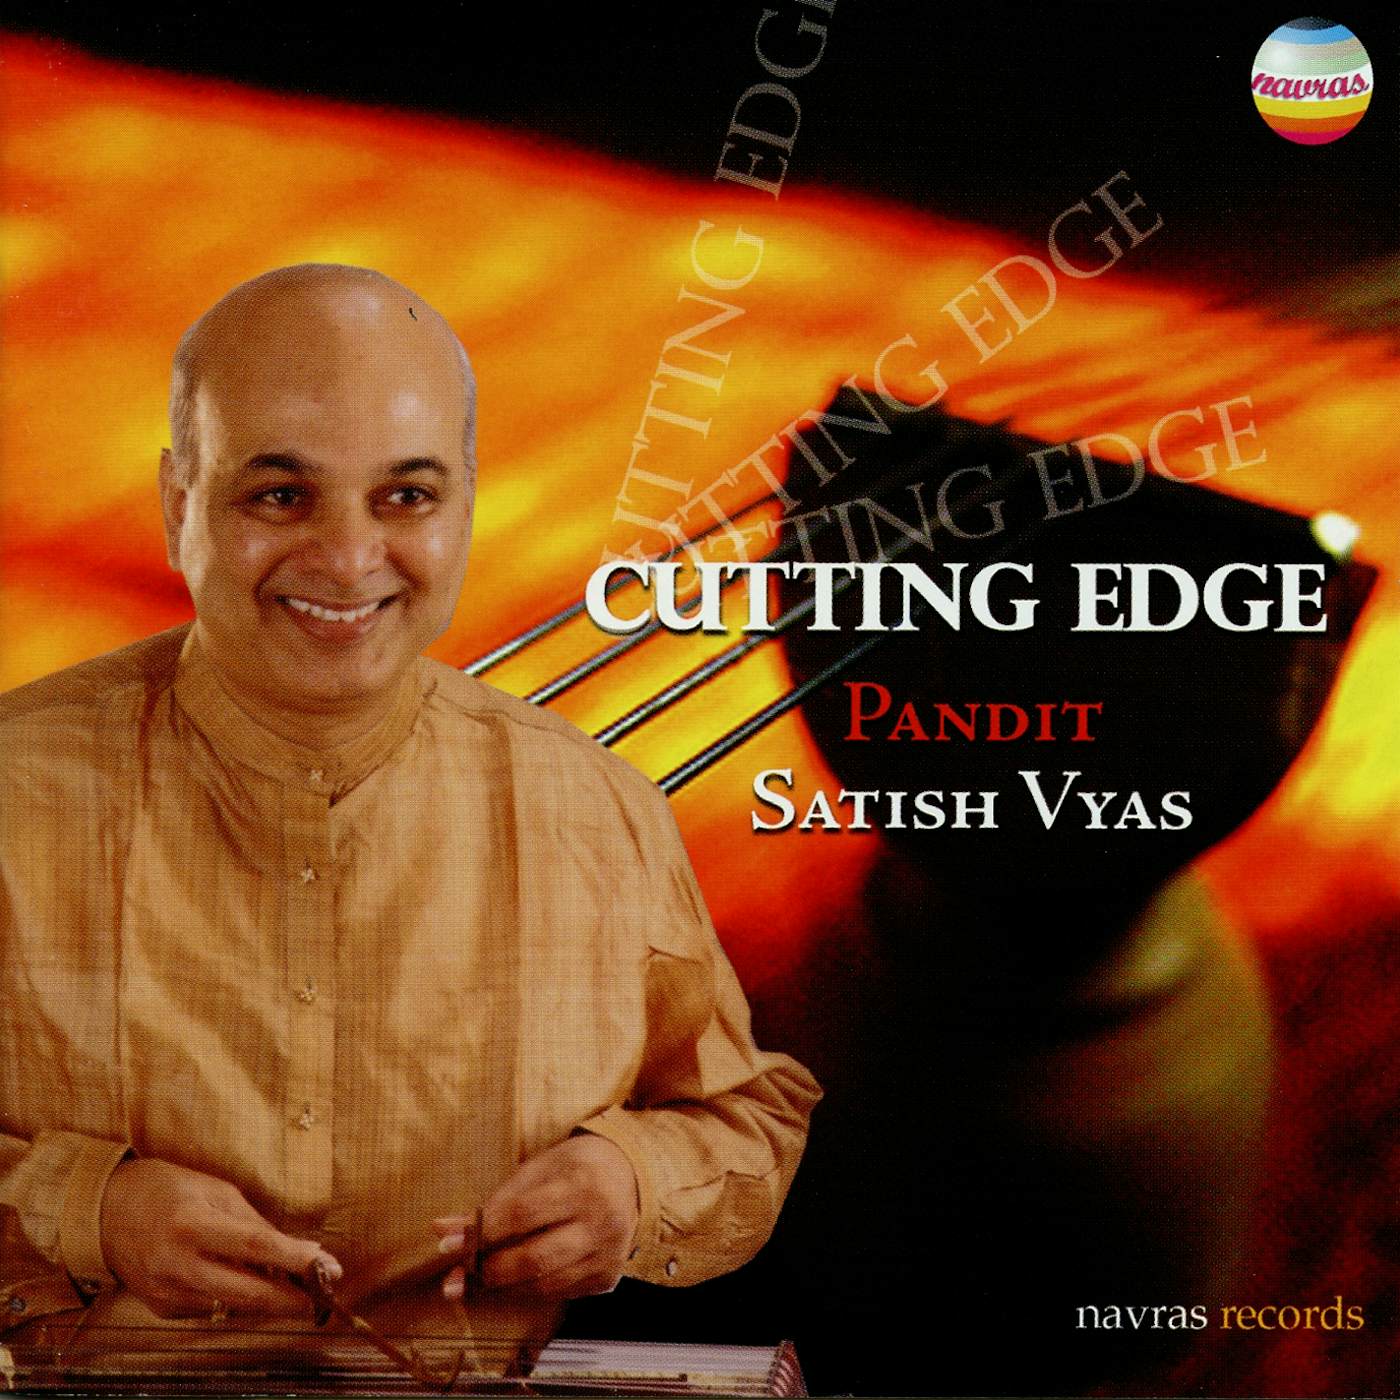 Satish Vyas CUTTING EDGE CD